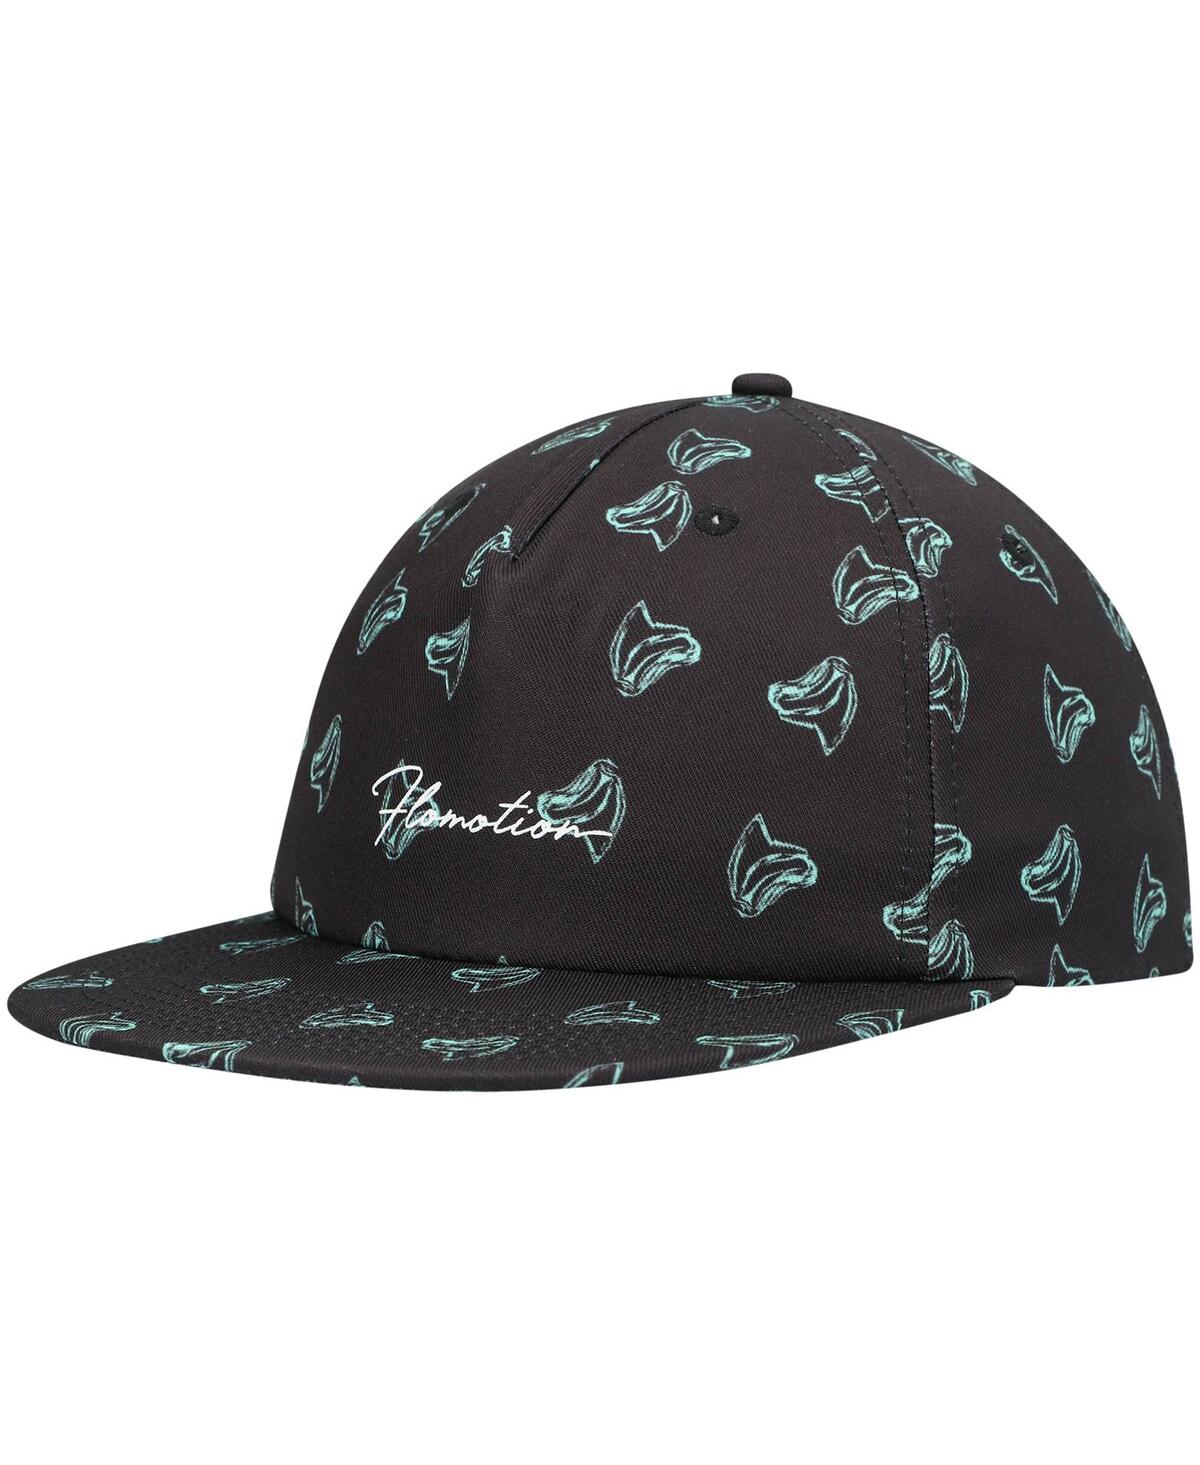 Flomotion Men's  Black Toothy Snapback Hat